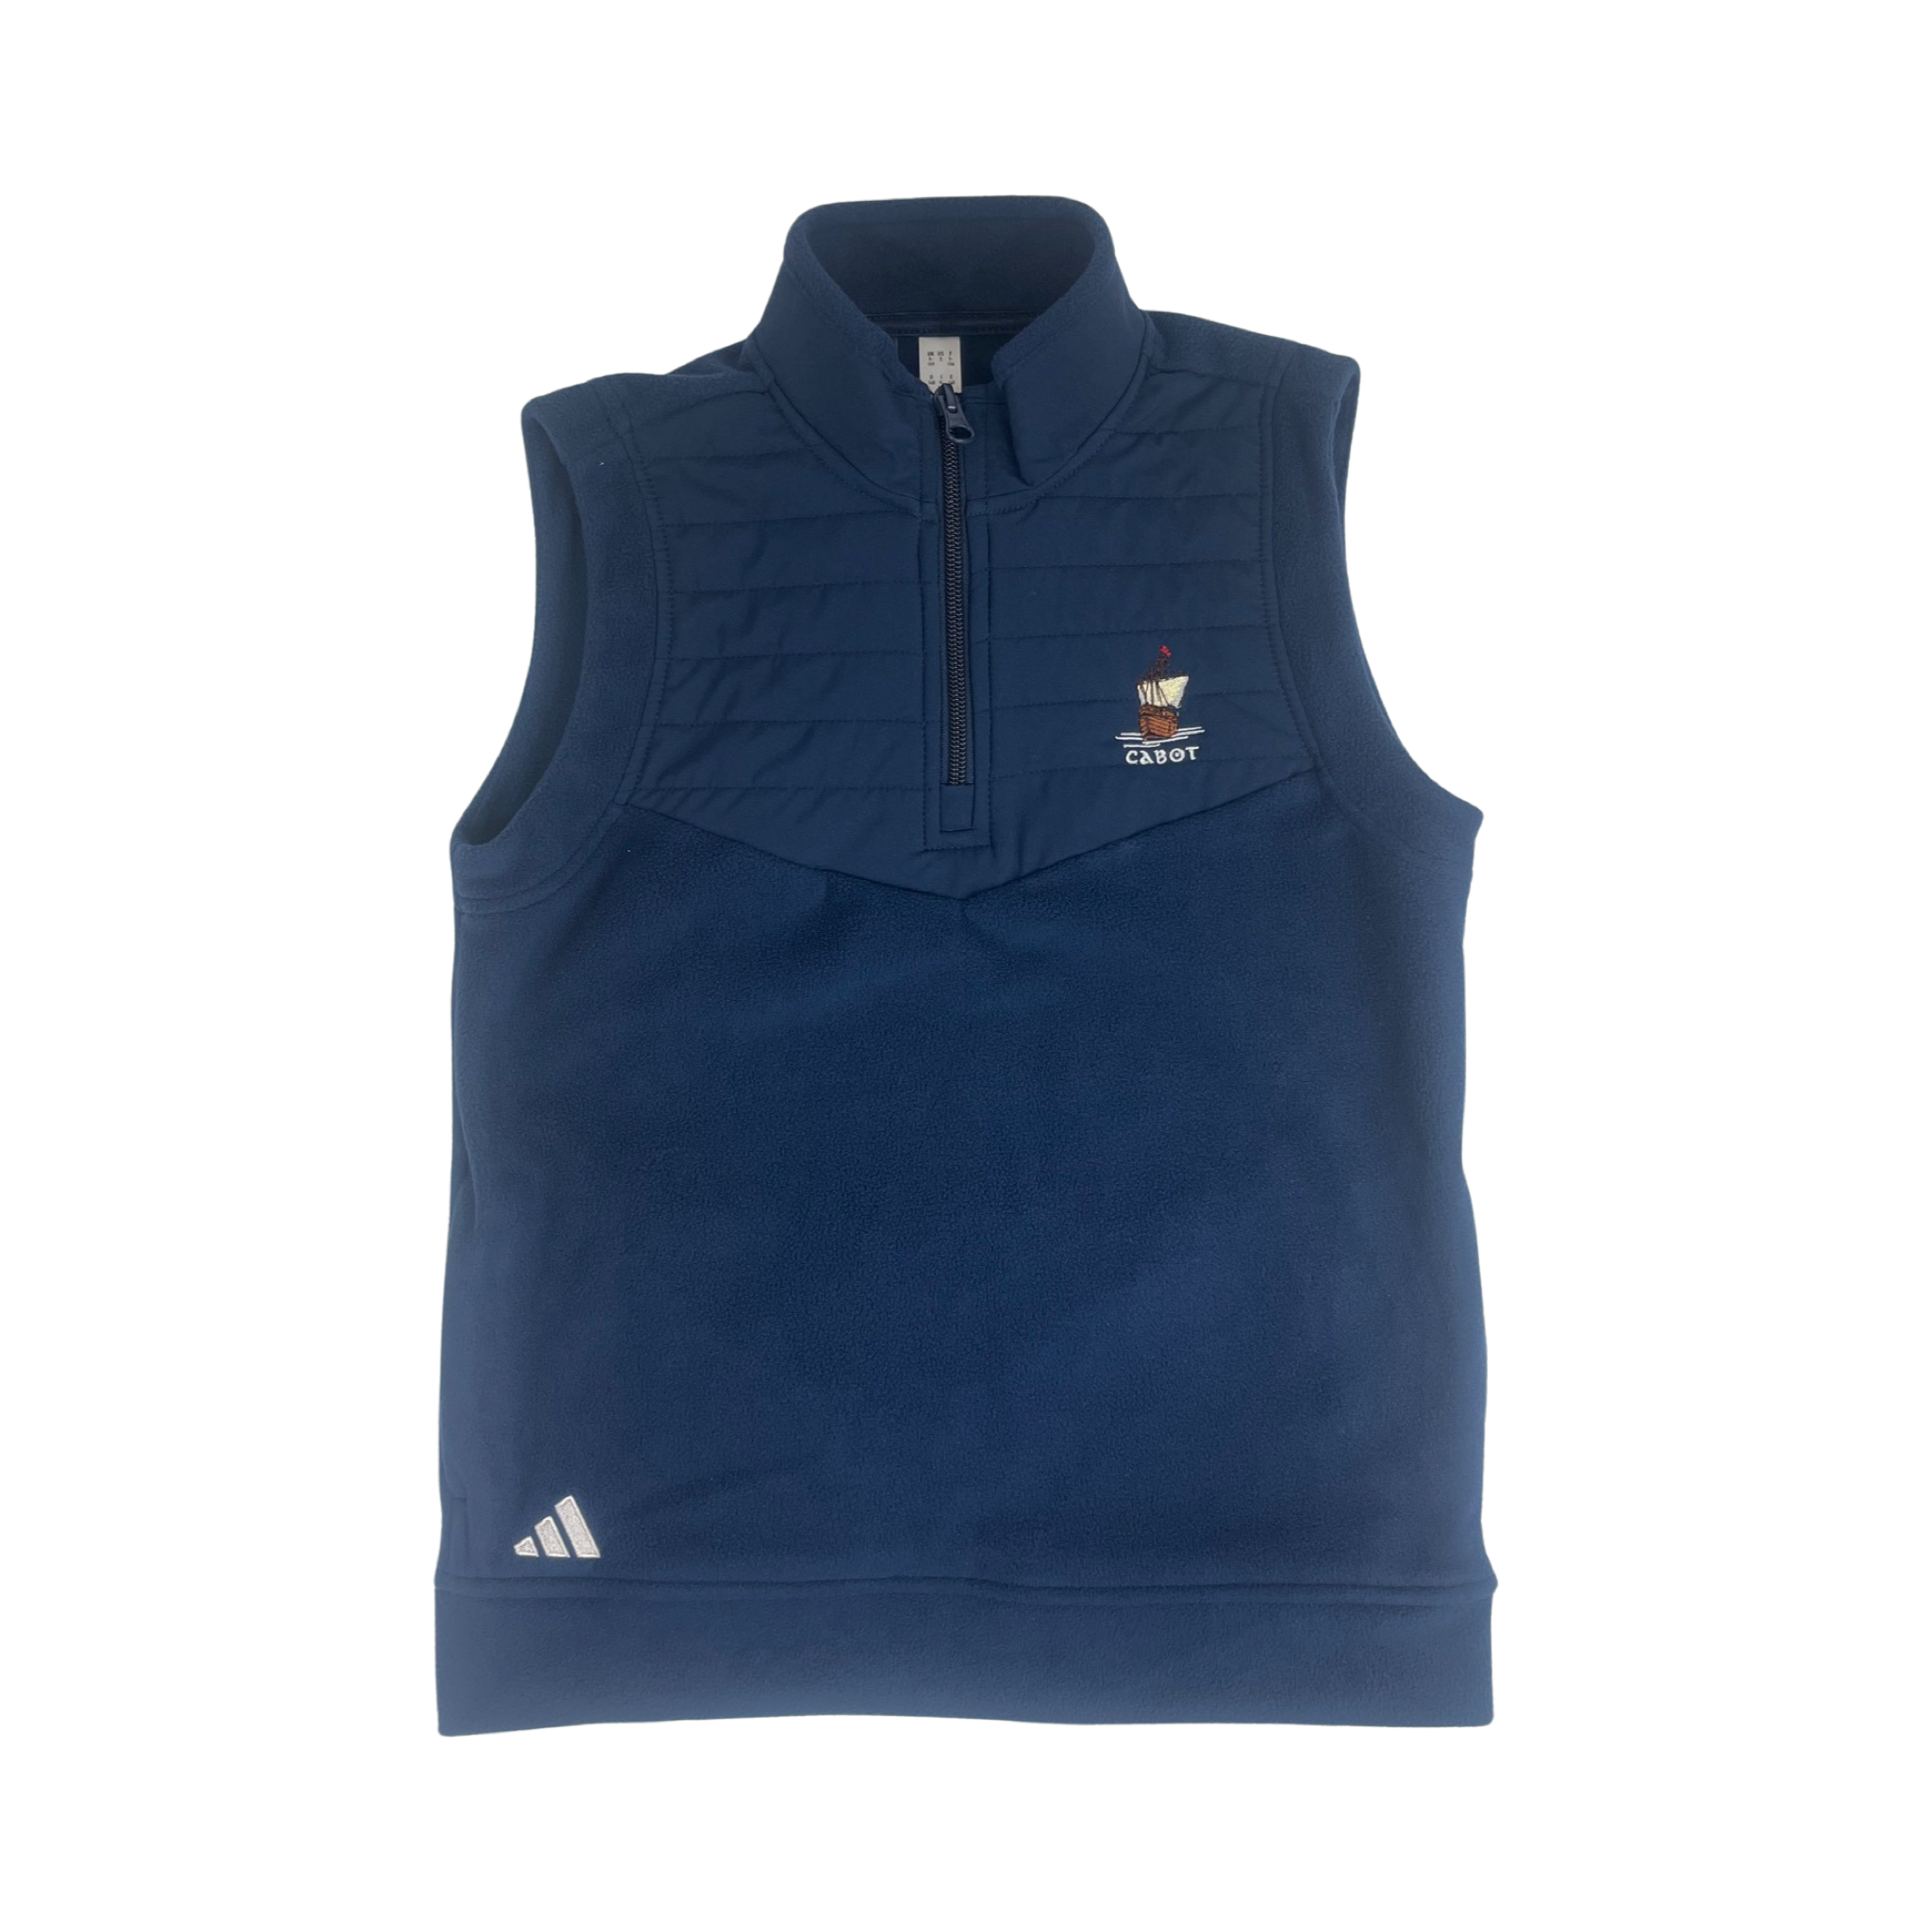 Adidas Cabot Links Junior Boys Fleece Vest